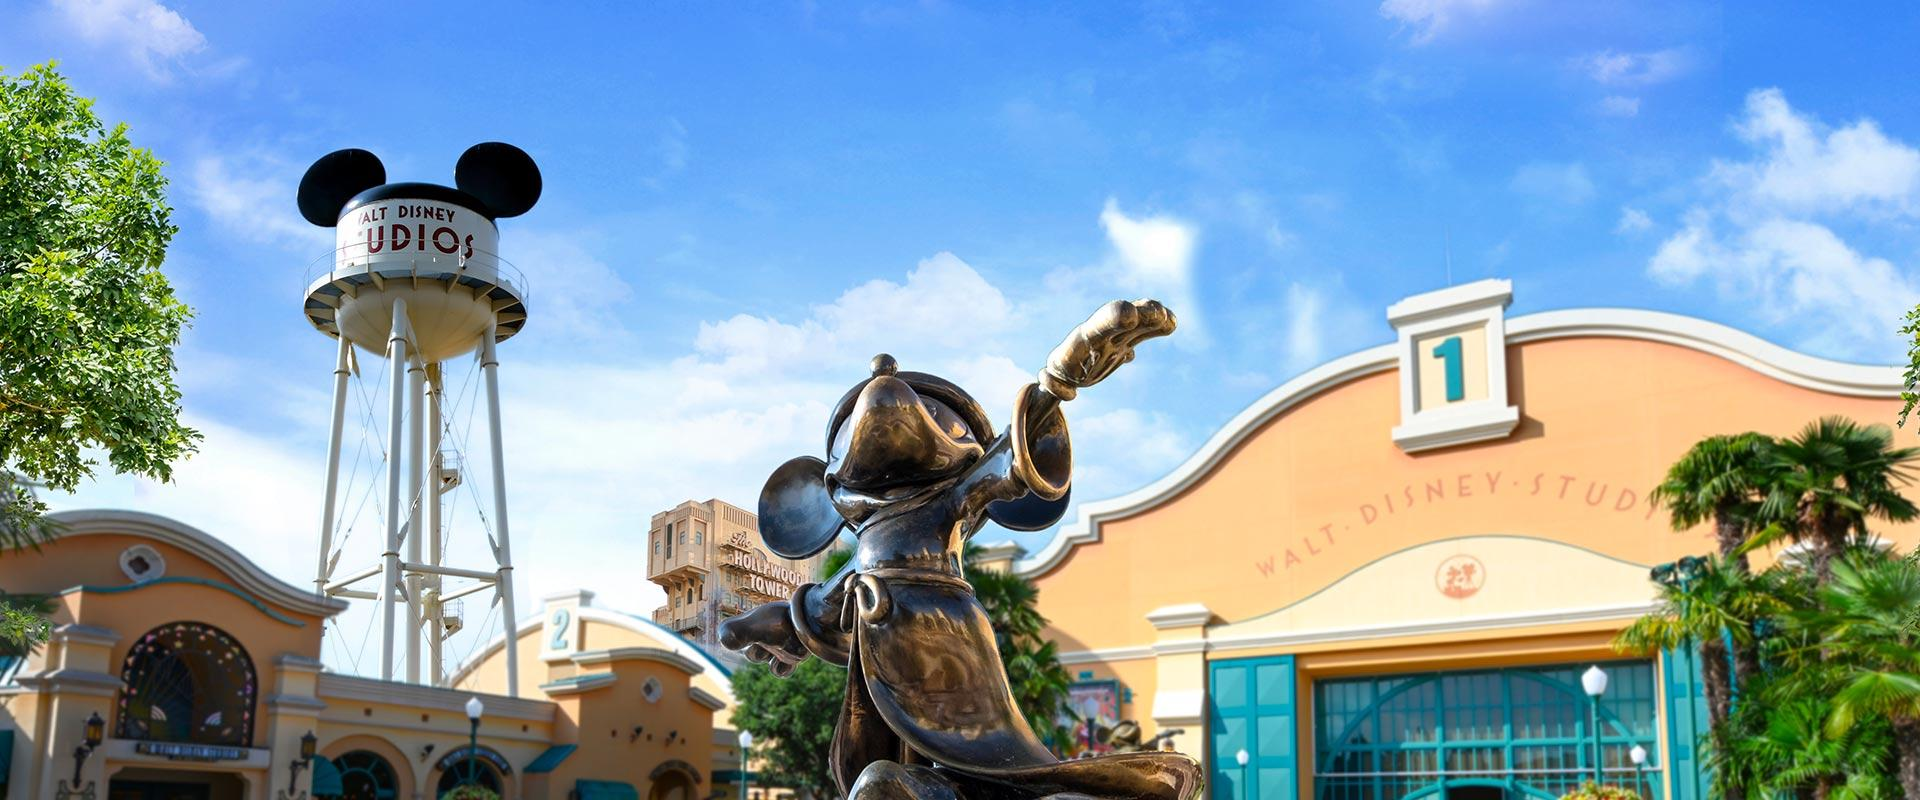 Walt Disney Studios Park gets “overture’ background music at Disneyland Paris